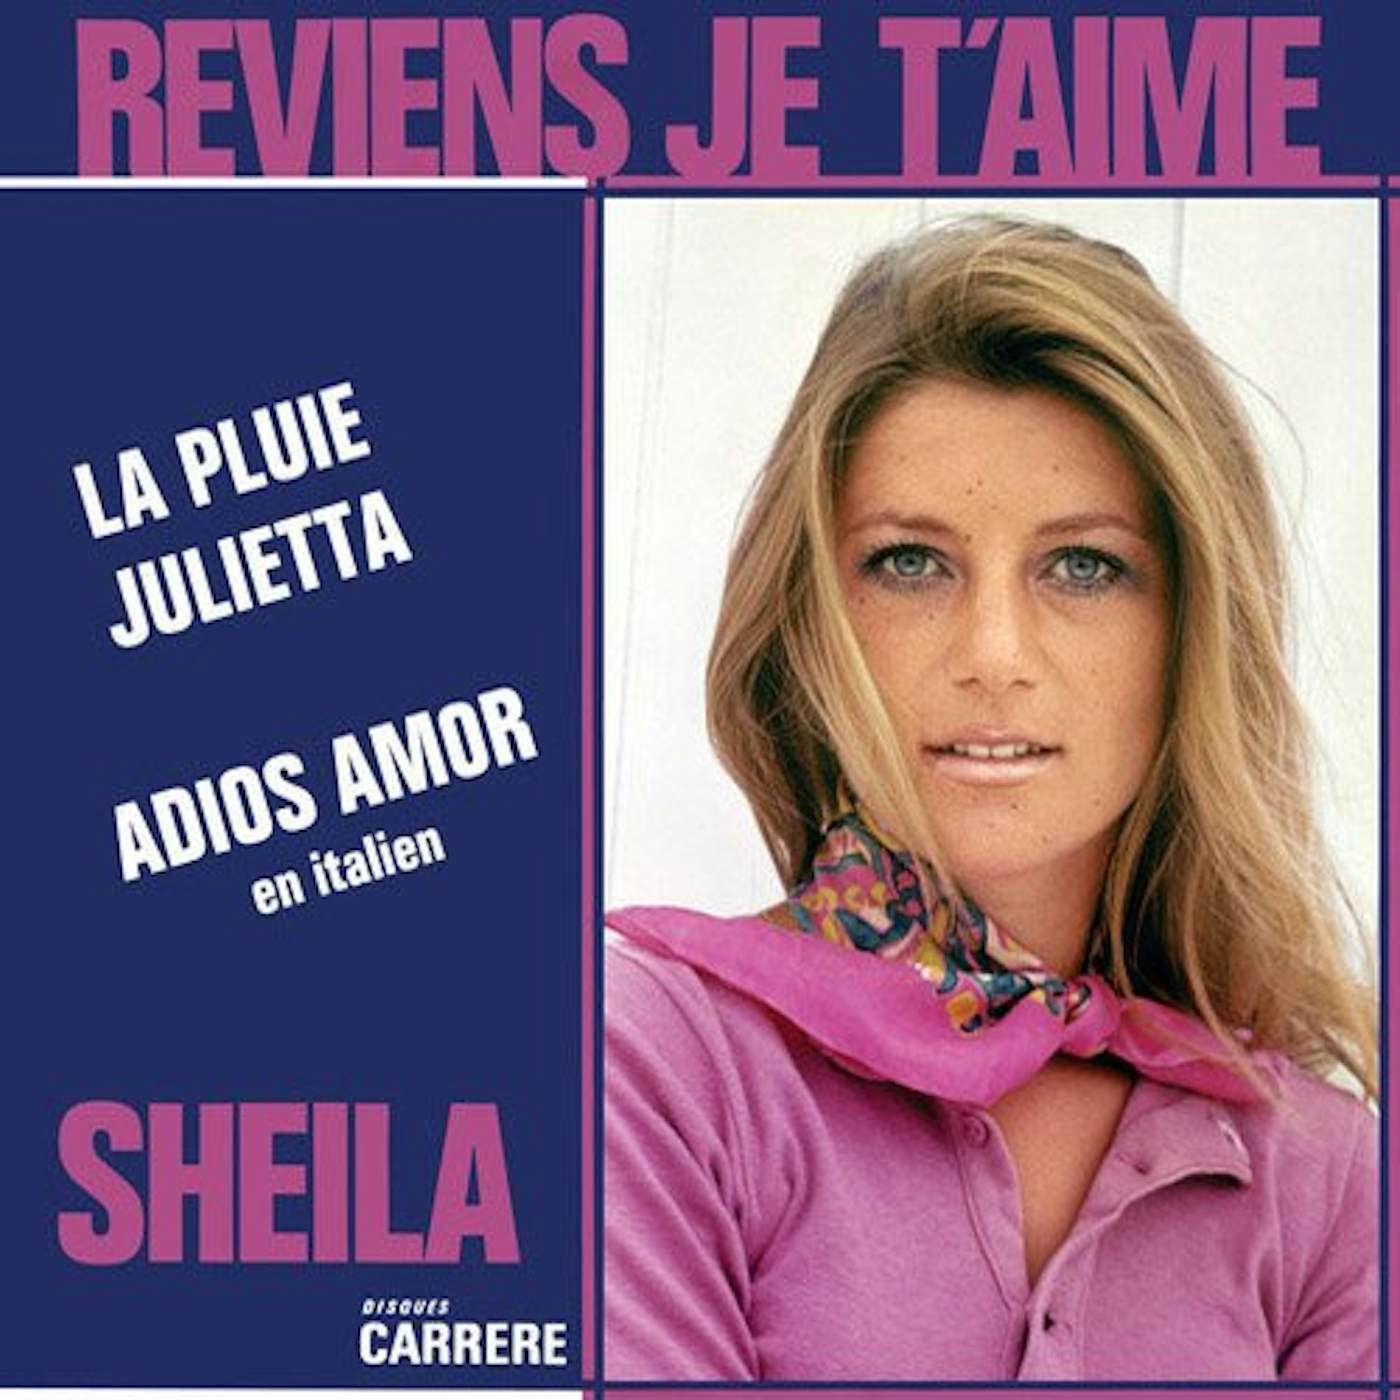 Sheila Reviens Je T'aime Vinyl Record